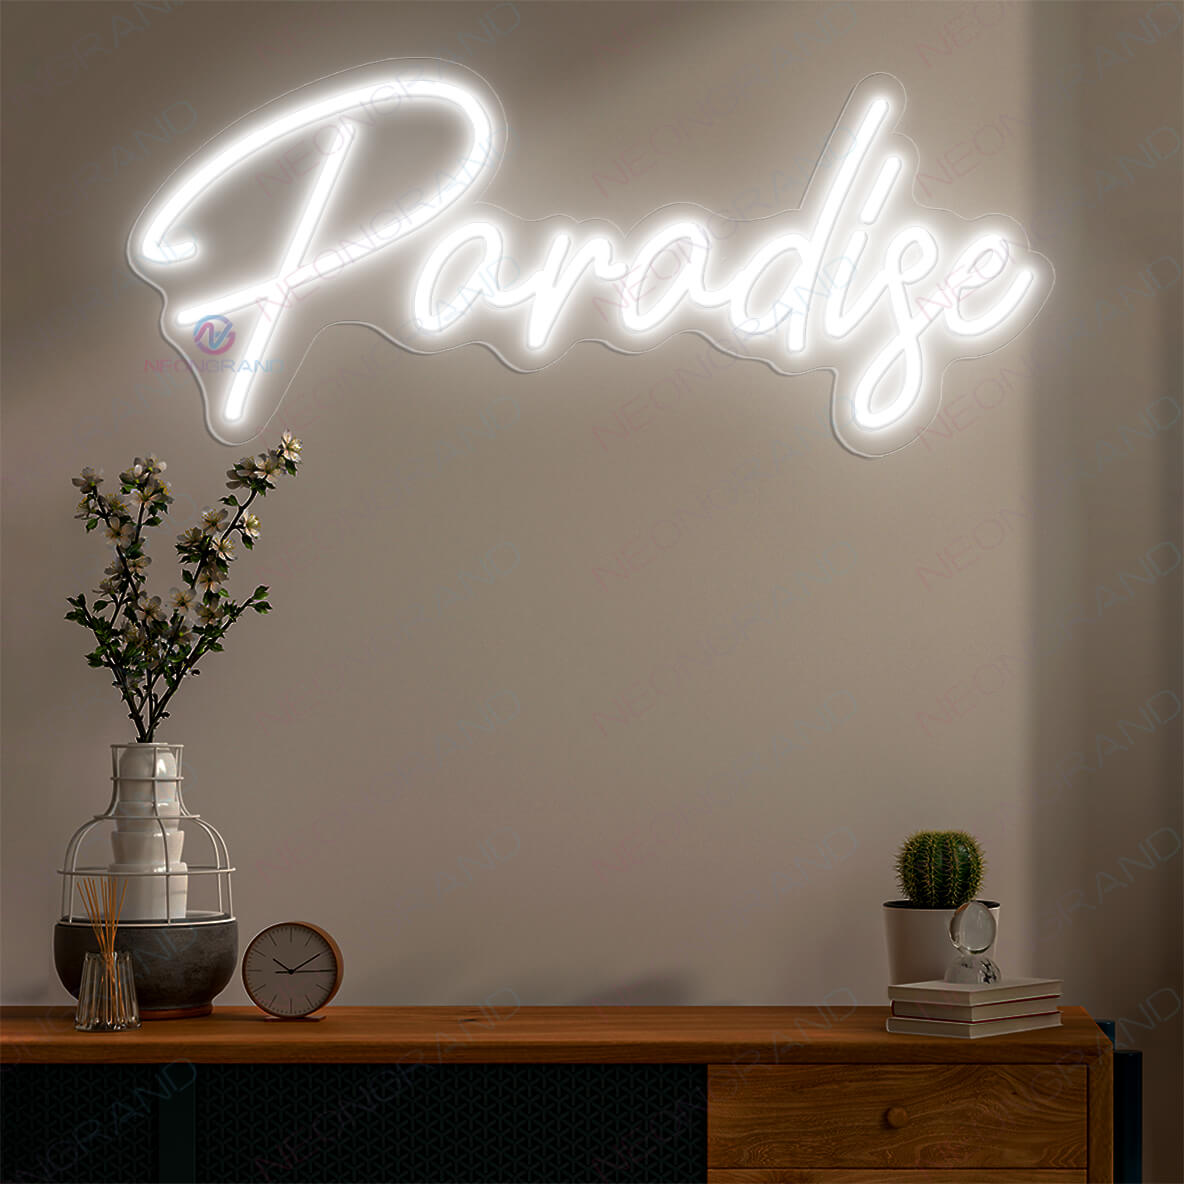 Paradise Neon Sign Bedroom Led Light Up Sign light blue white